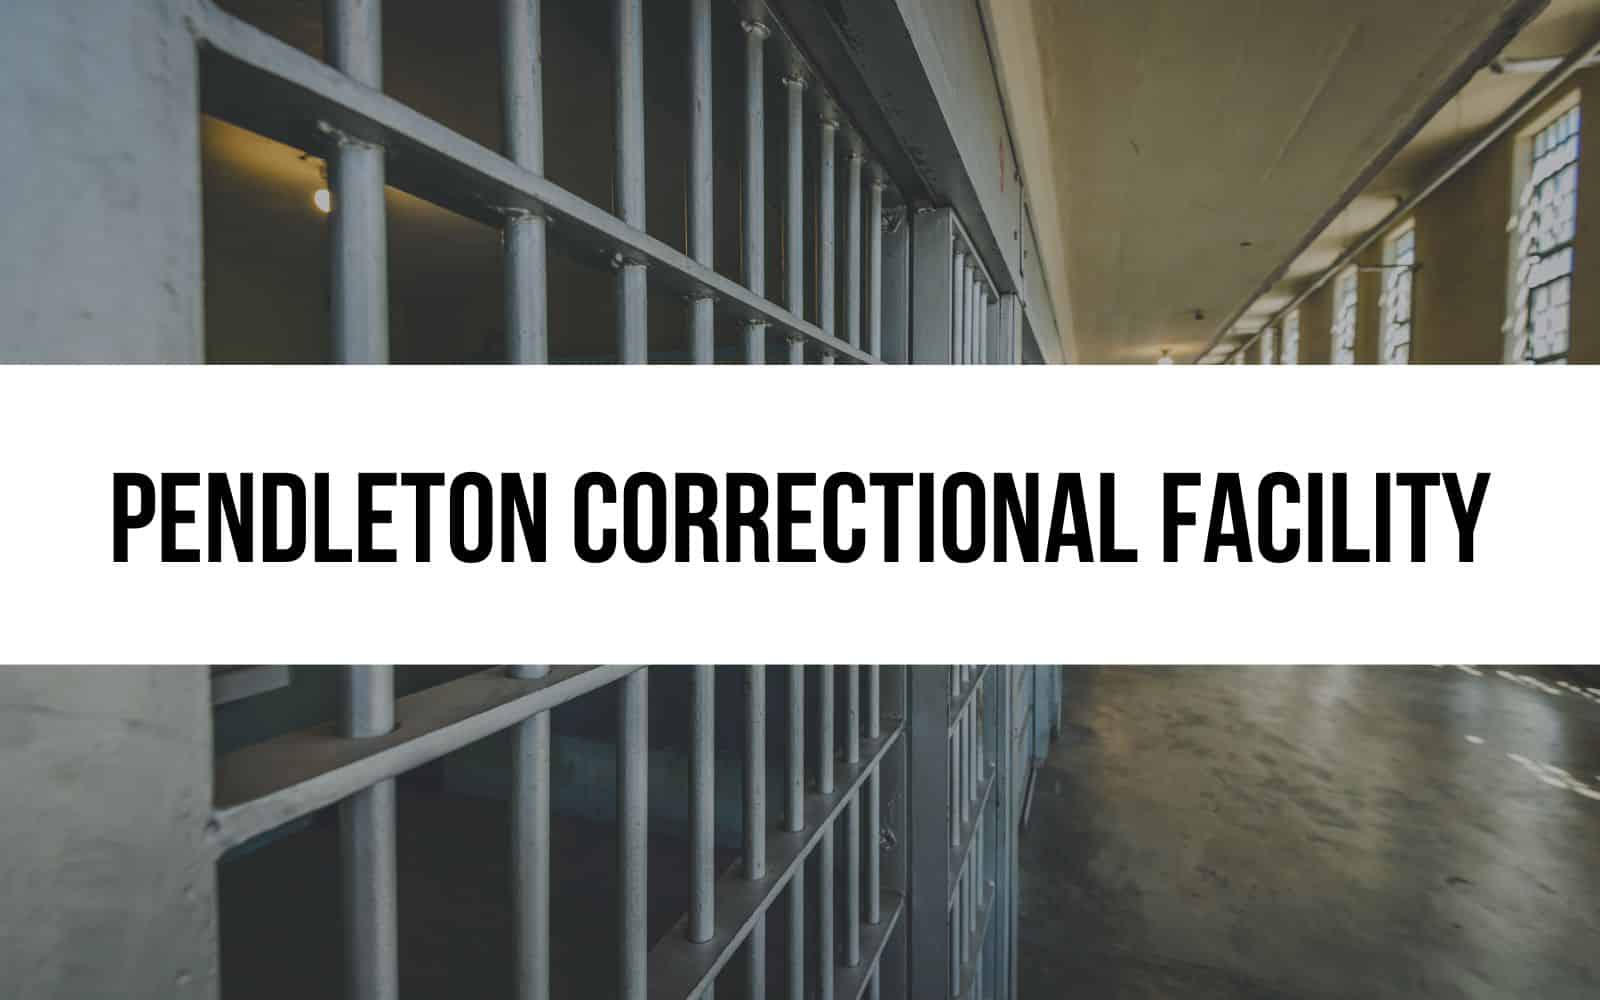 Pendleton Correctional Facility